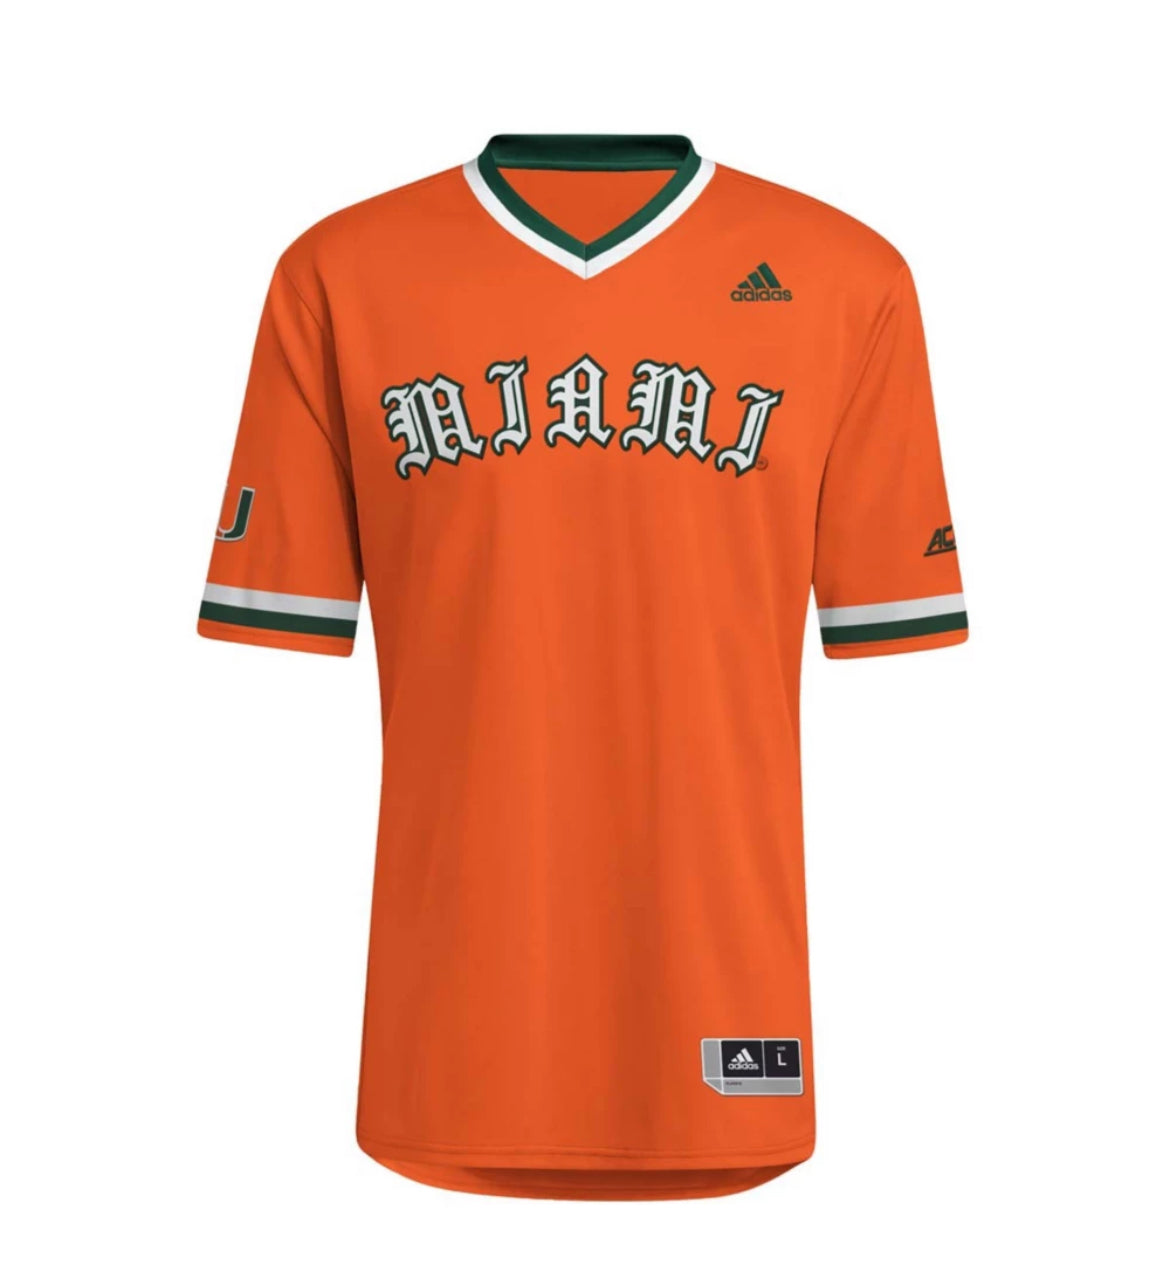 Adidas Miami Hurricanes Orange Baseball Jersey